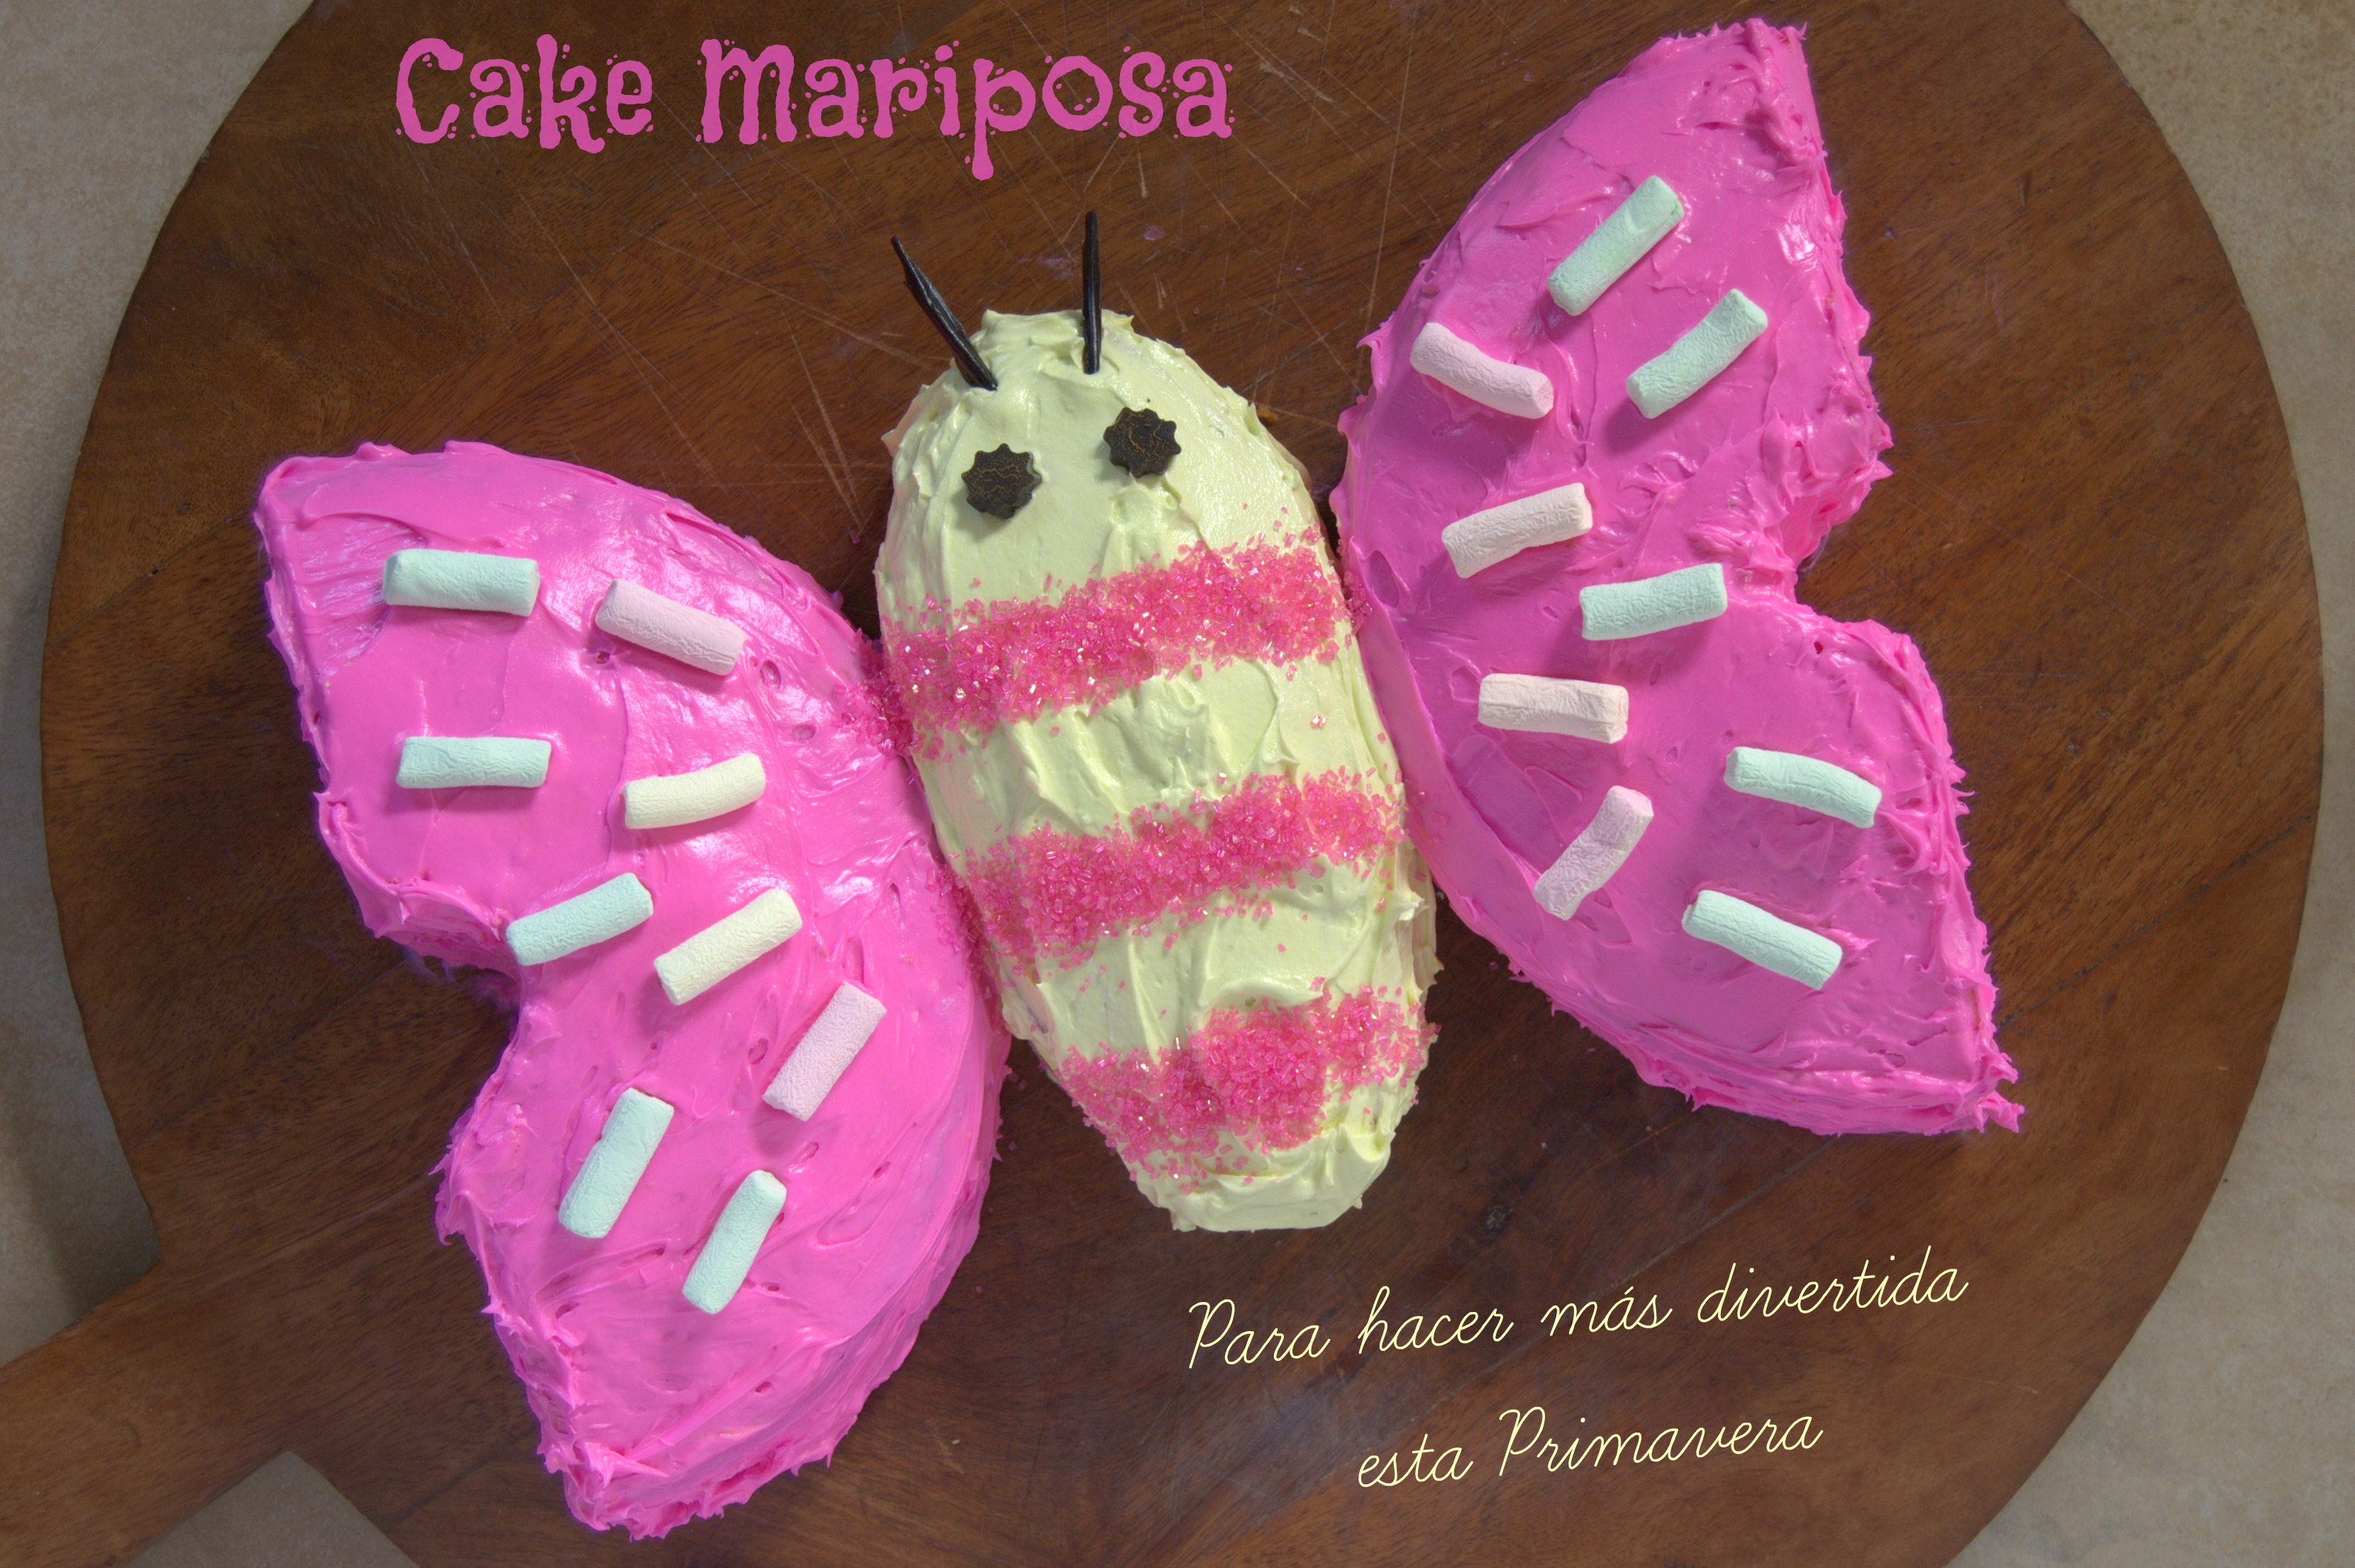 mariposa cake, decorar cakes, baking